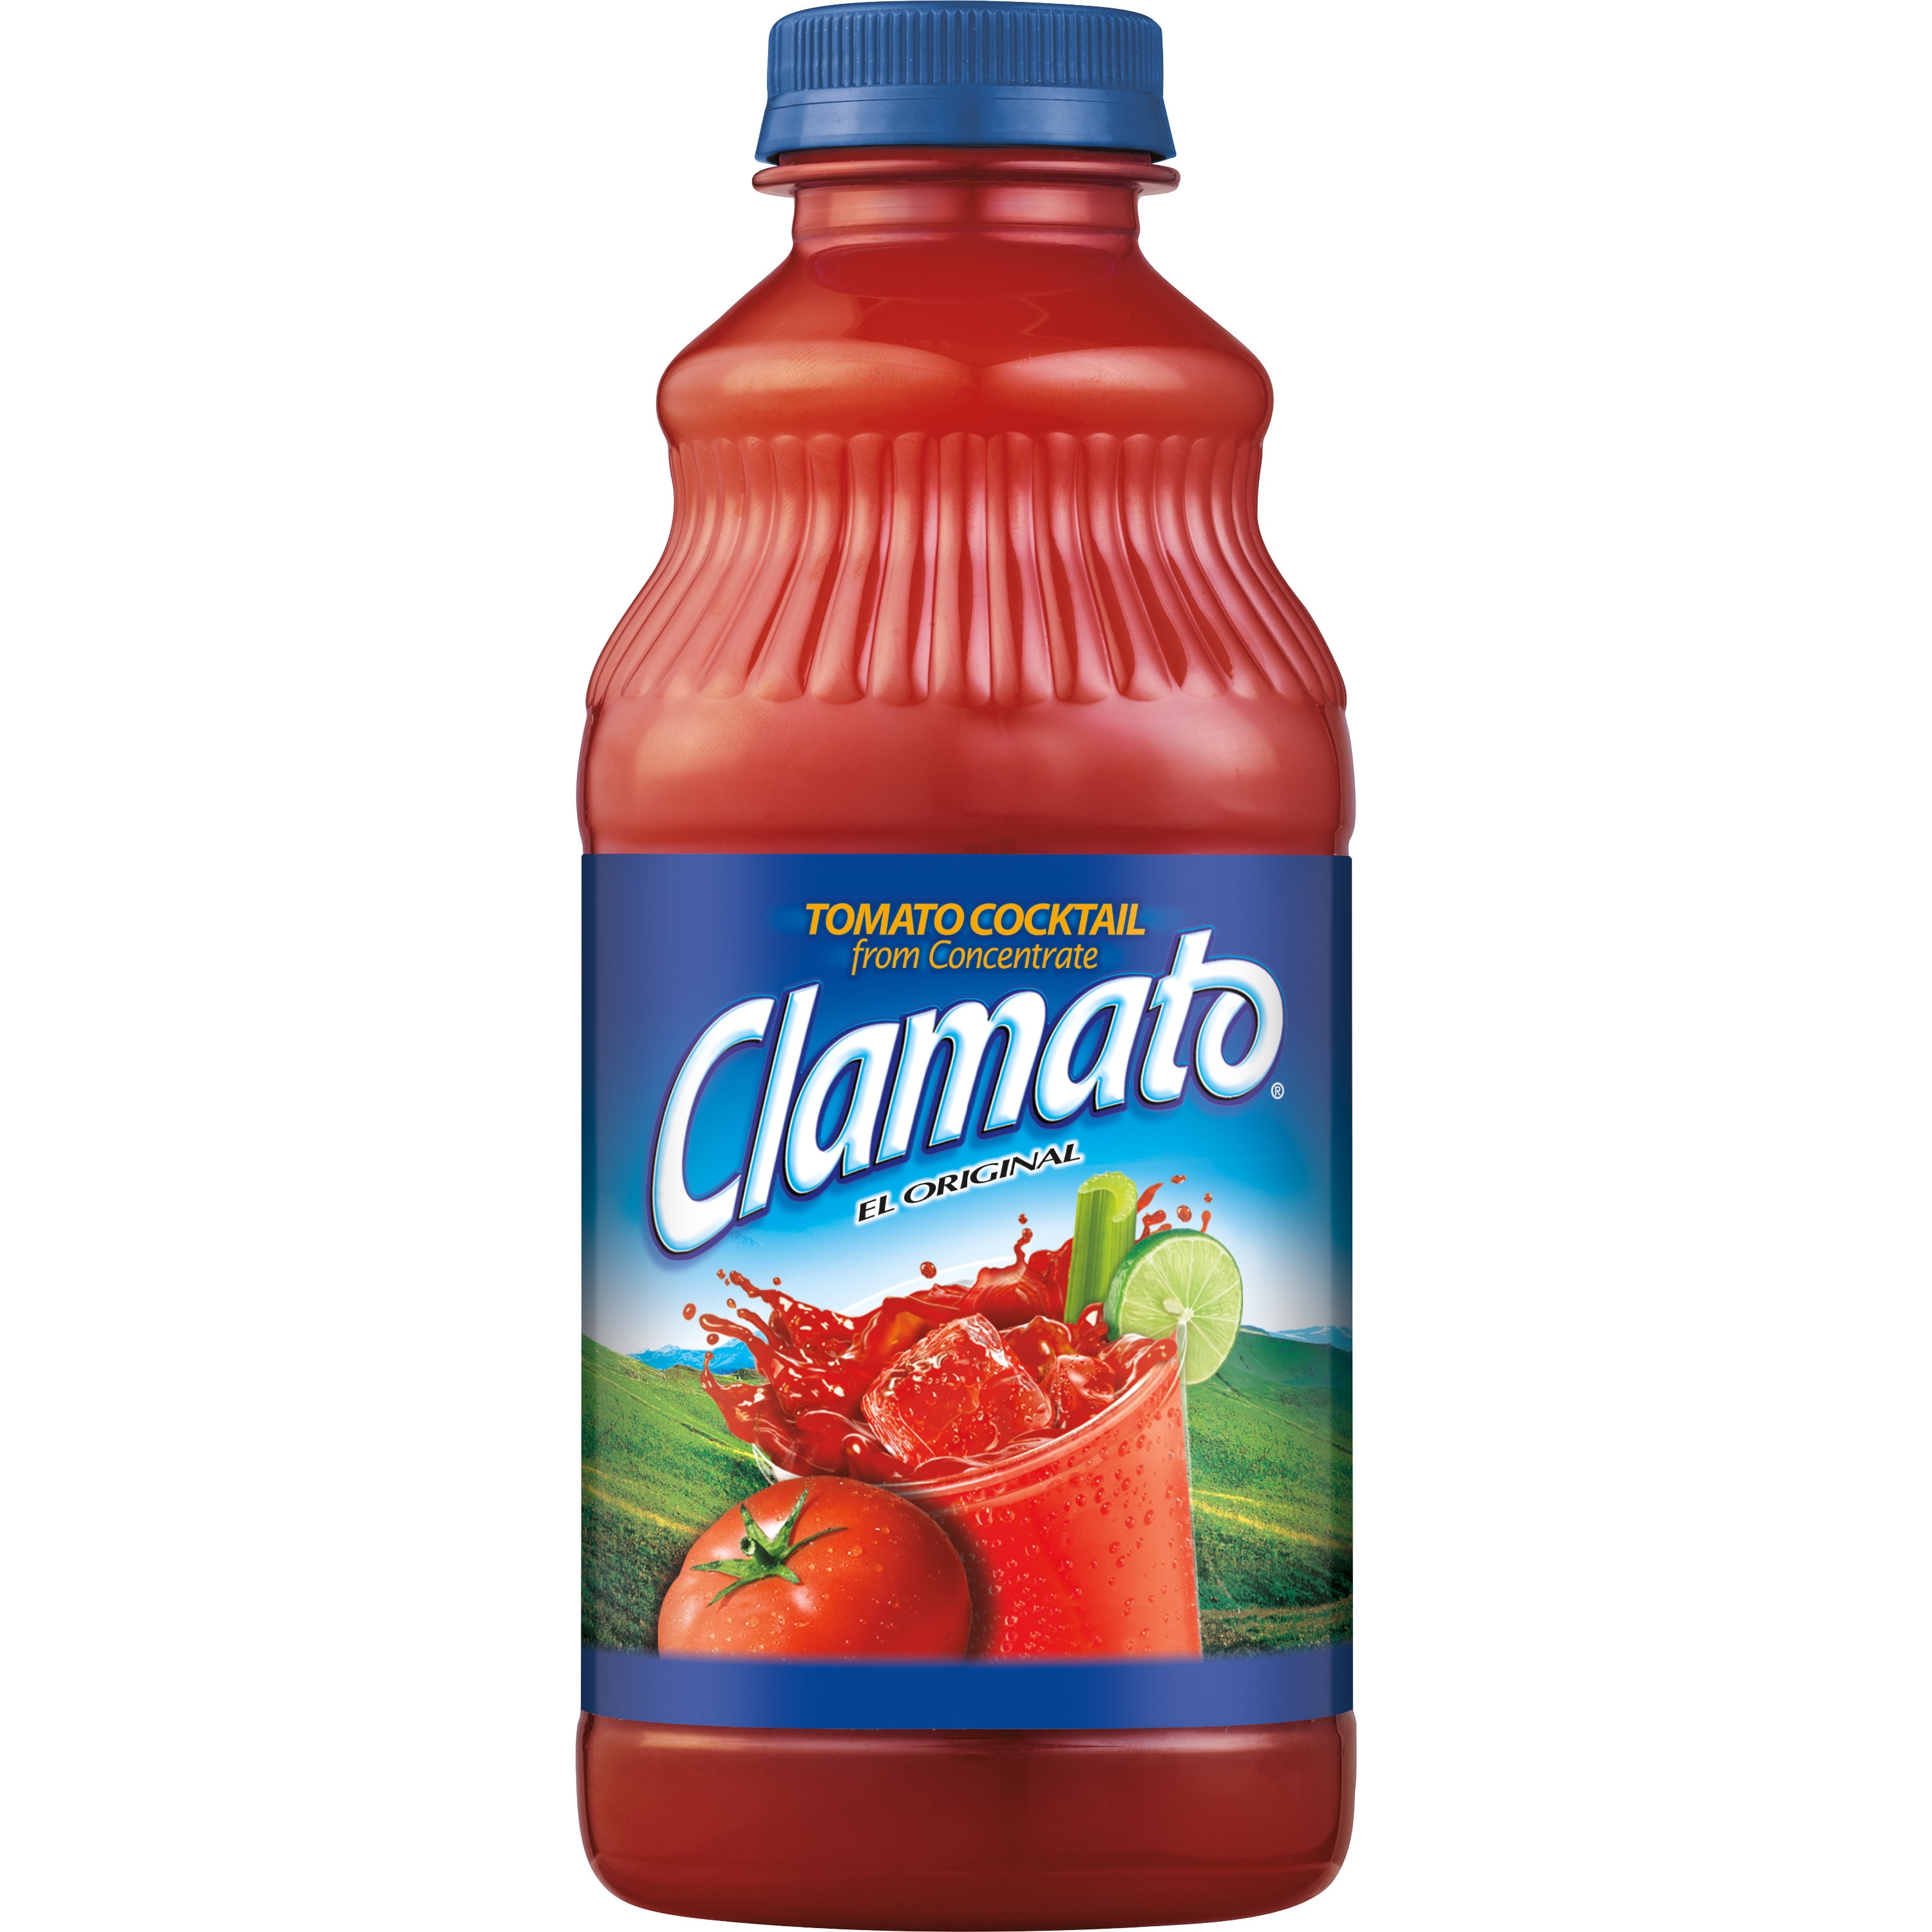 Clamato Original Tomato Cocktail, 32 fl oz bottle - Walmart.com